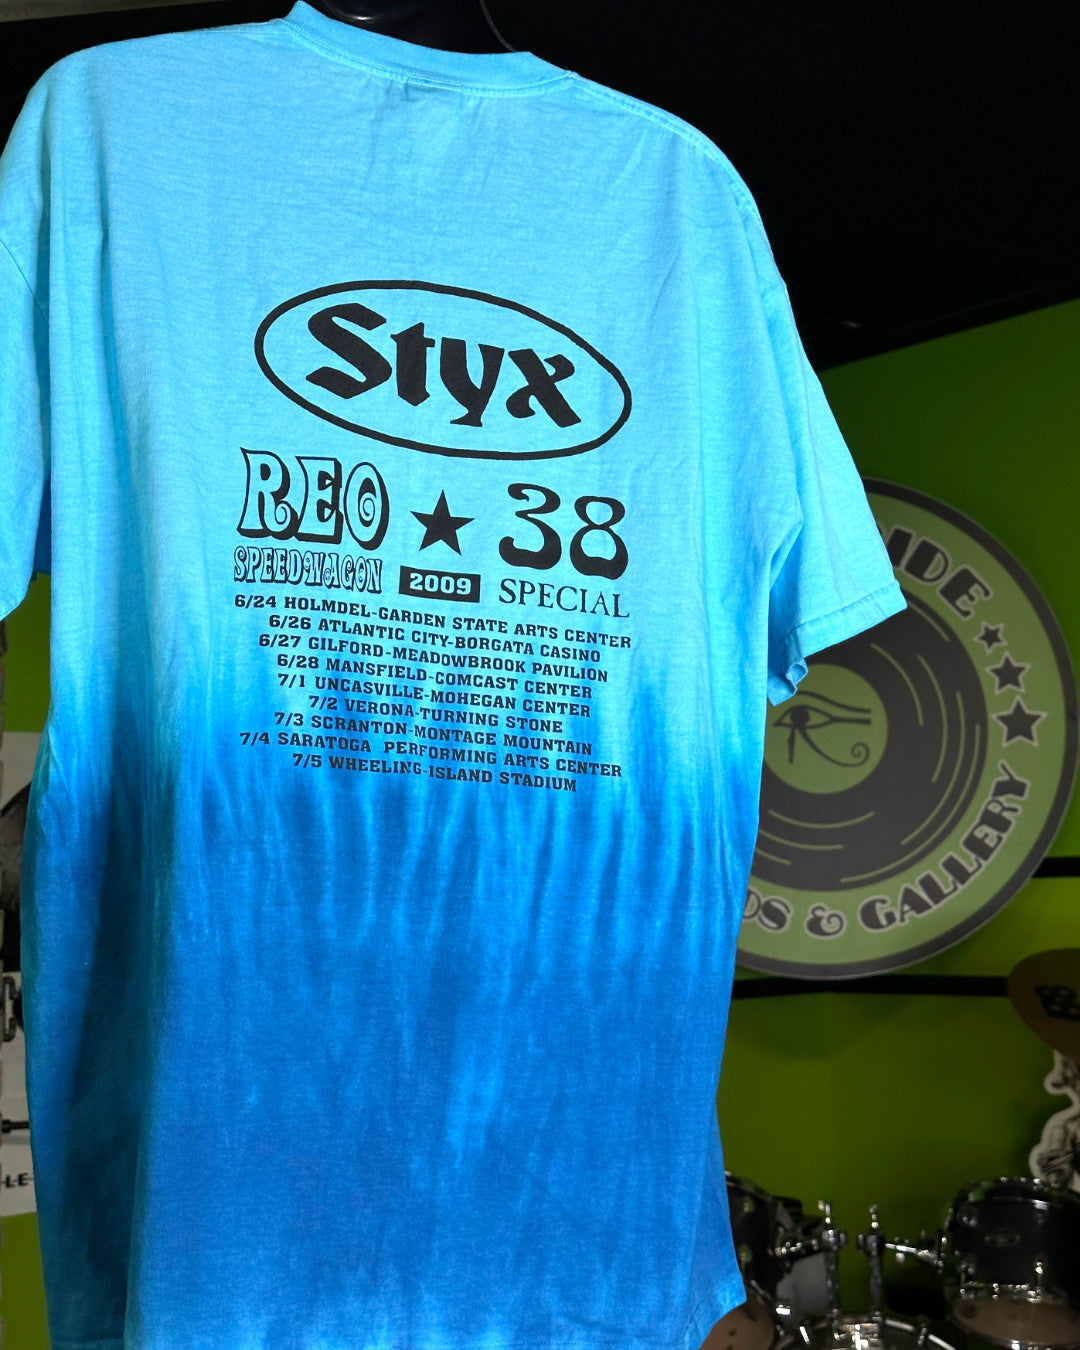 Styx REO Speedwagon 38 Special 2009 Can't Stop Rockin Tour T-Shirt, Light Blue/Dark Blue TieDye, XL - Darkside Records